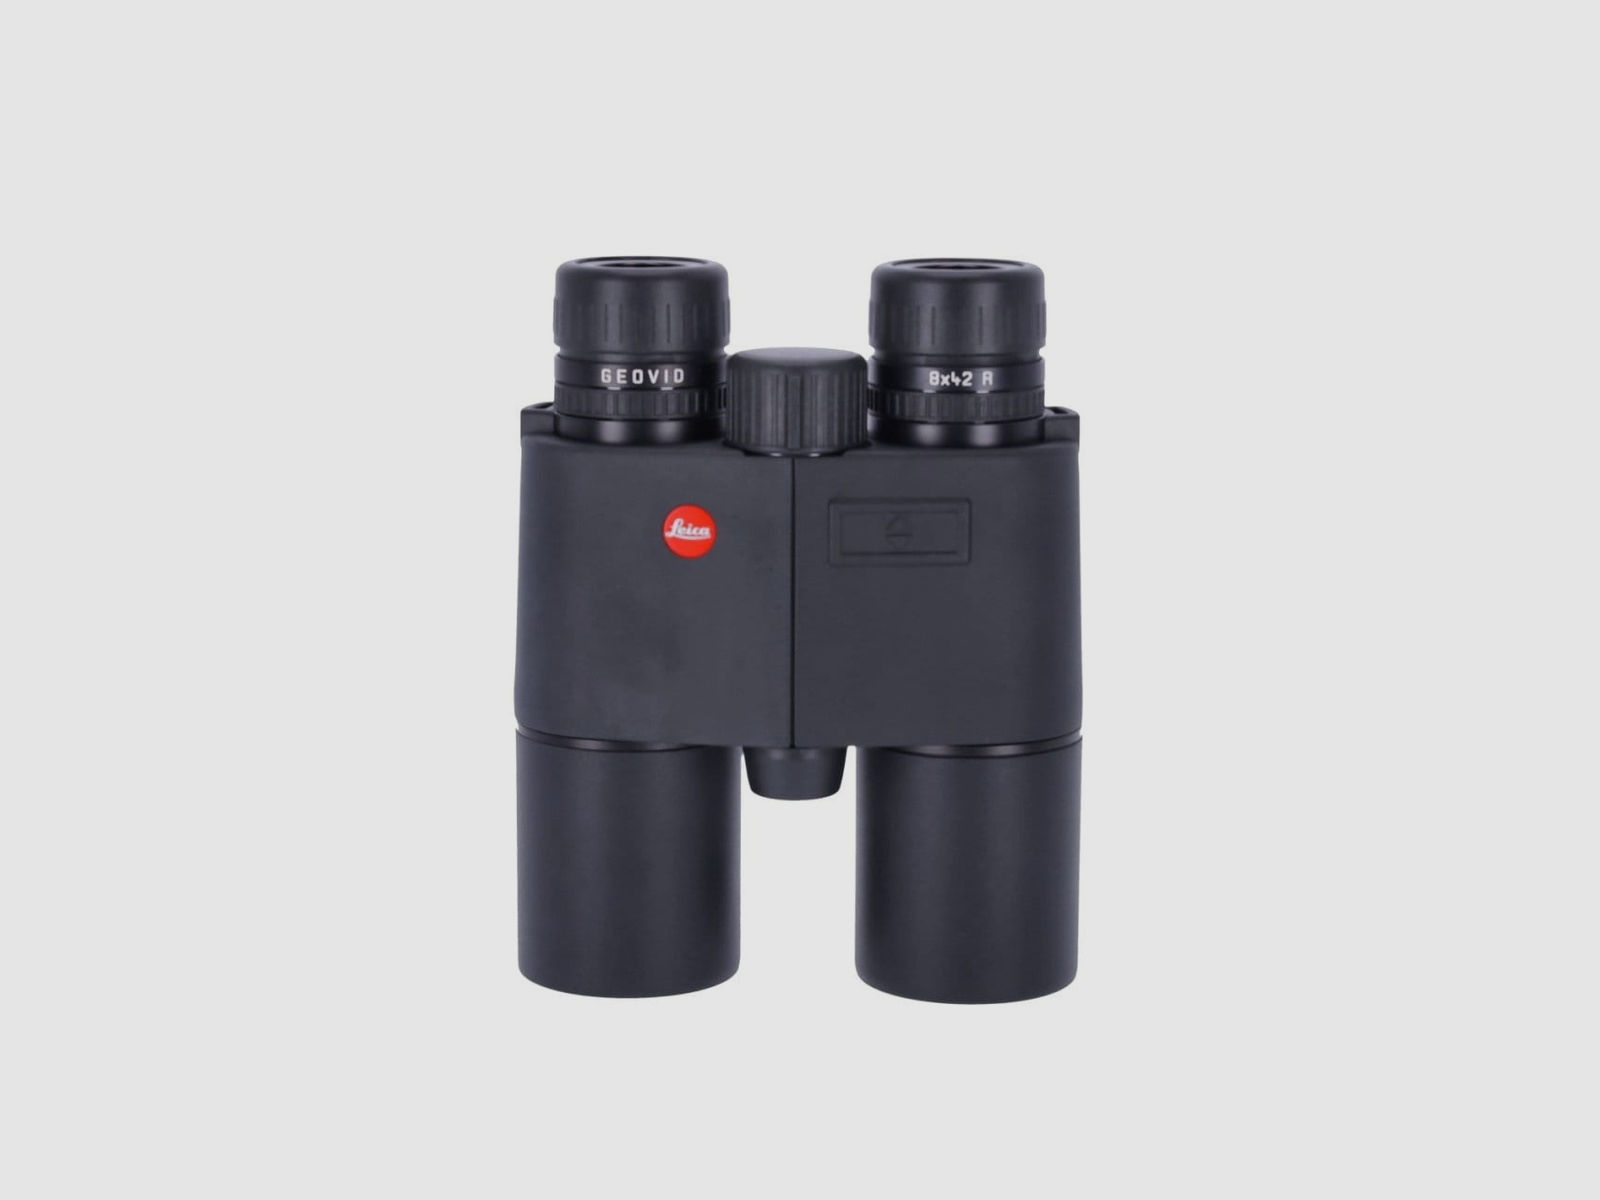 Leica Geovid 8x42 R Fernglas mit Entfernungsmesser